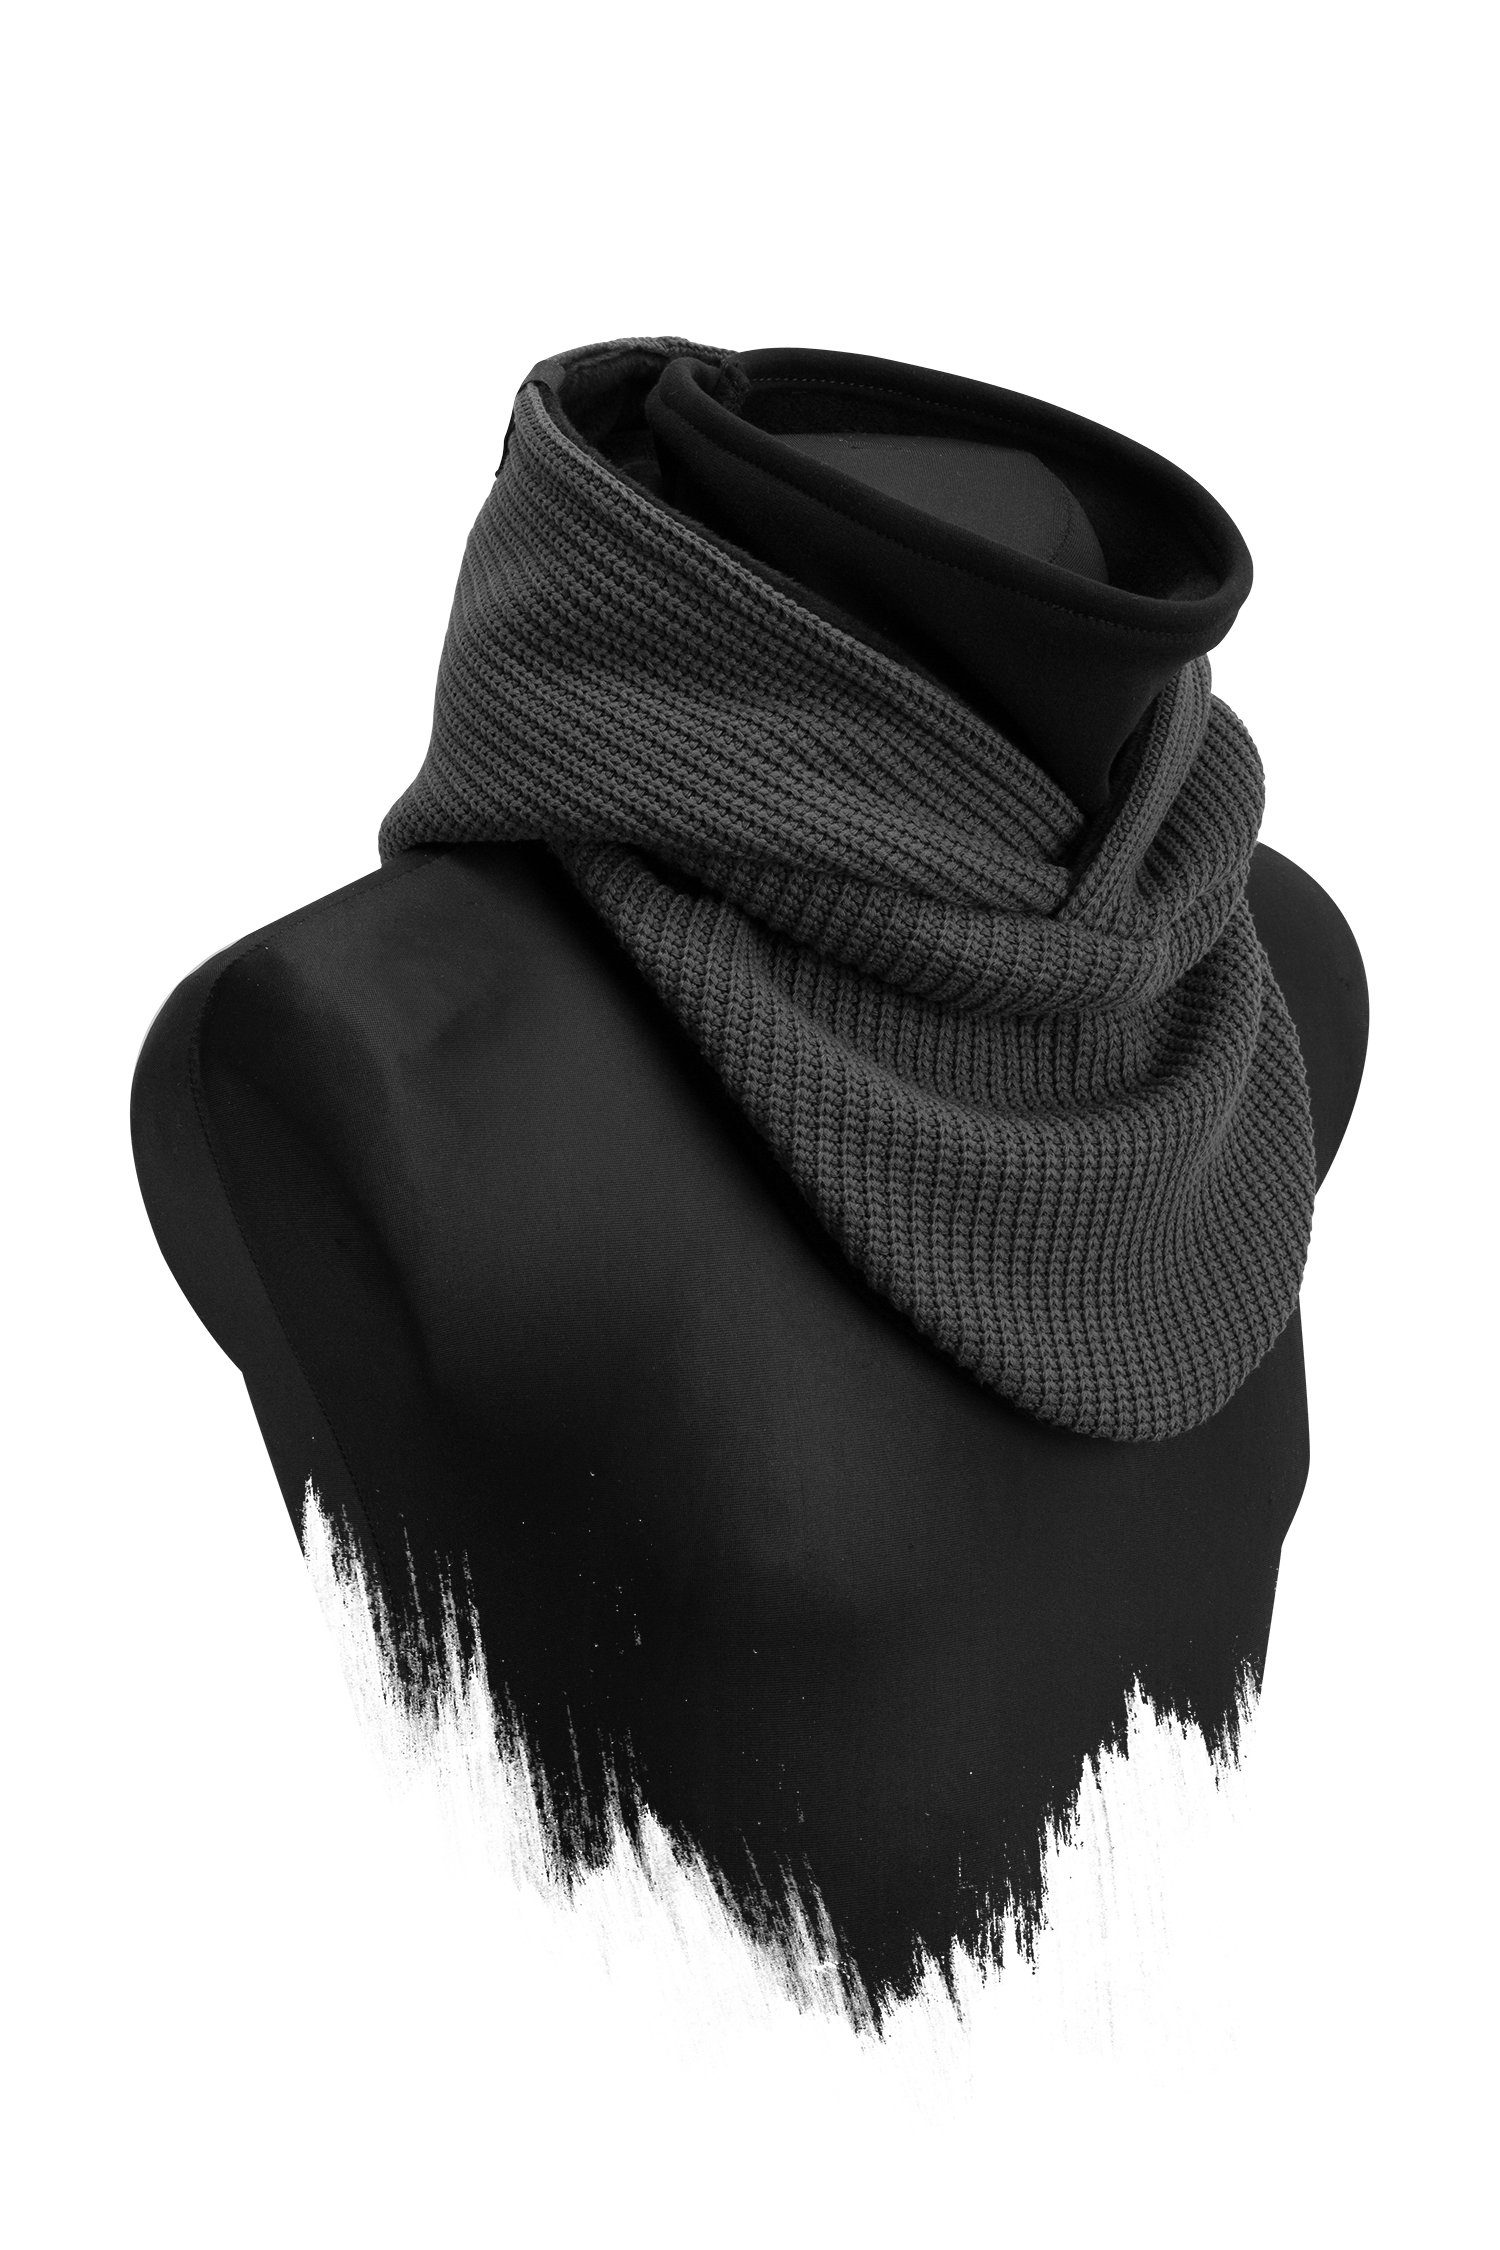 Hooded integriertem Modeschal Manufaktur13 Strickschal, - mit Knit Storm Windbreaker Kapuzenschal, Schal, Loop Grey